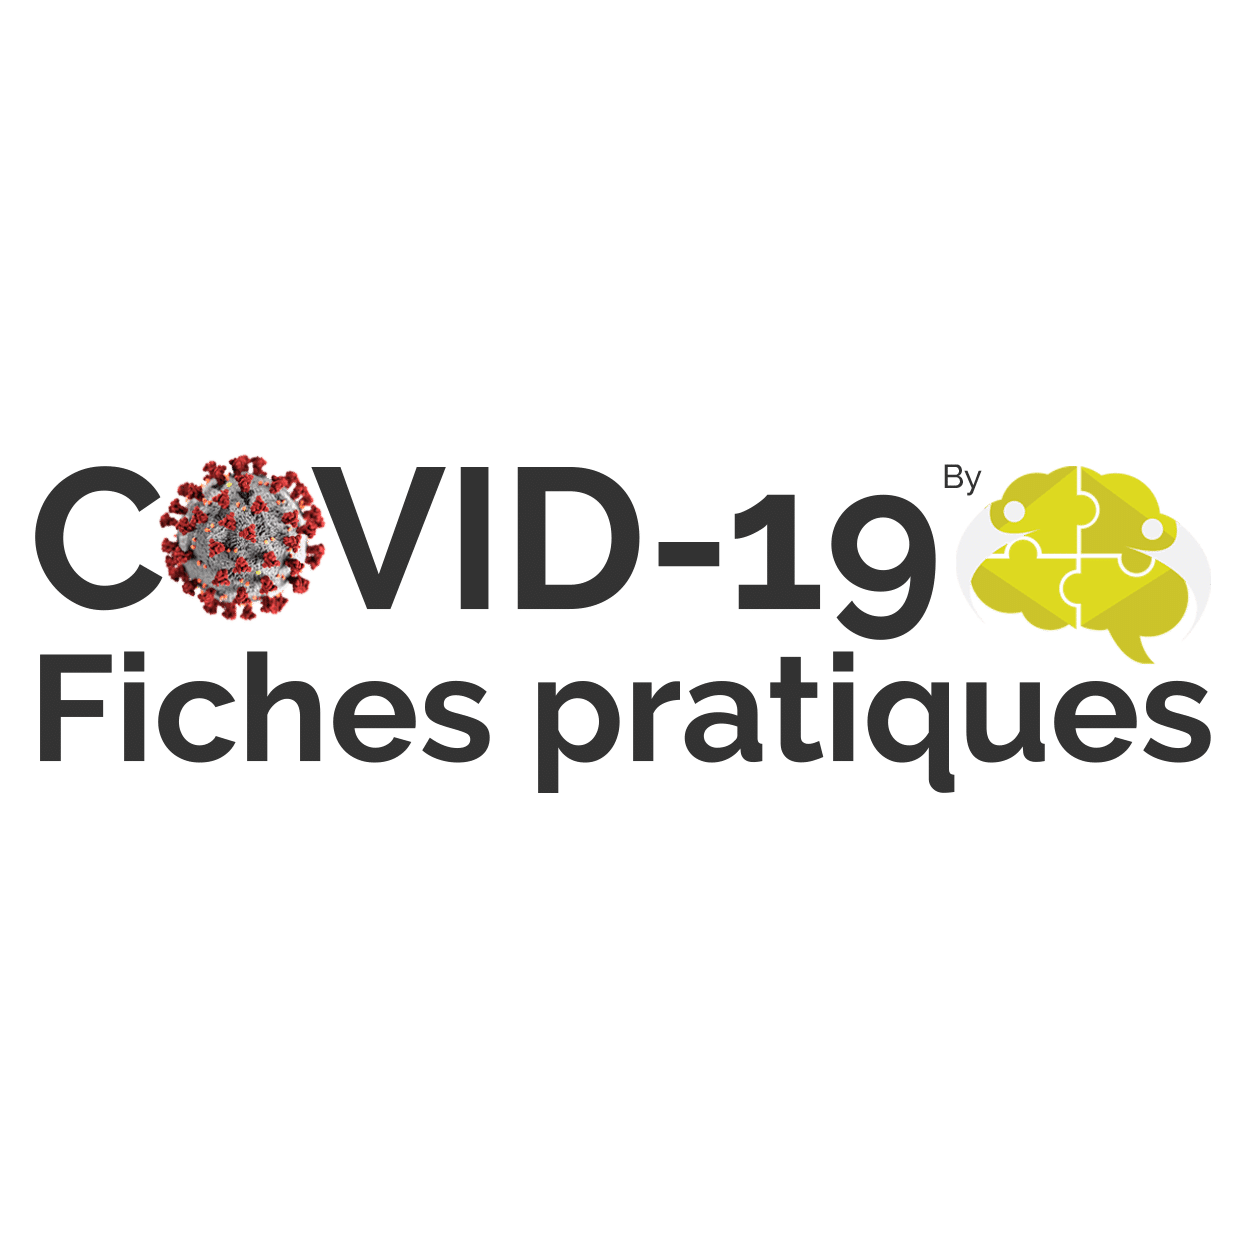 COVID-19 - Fiches pratiques